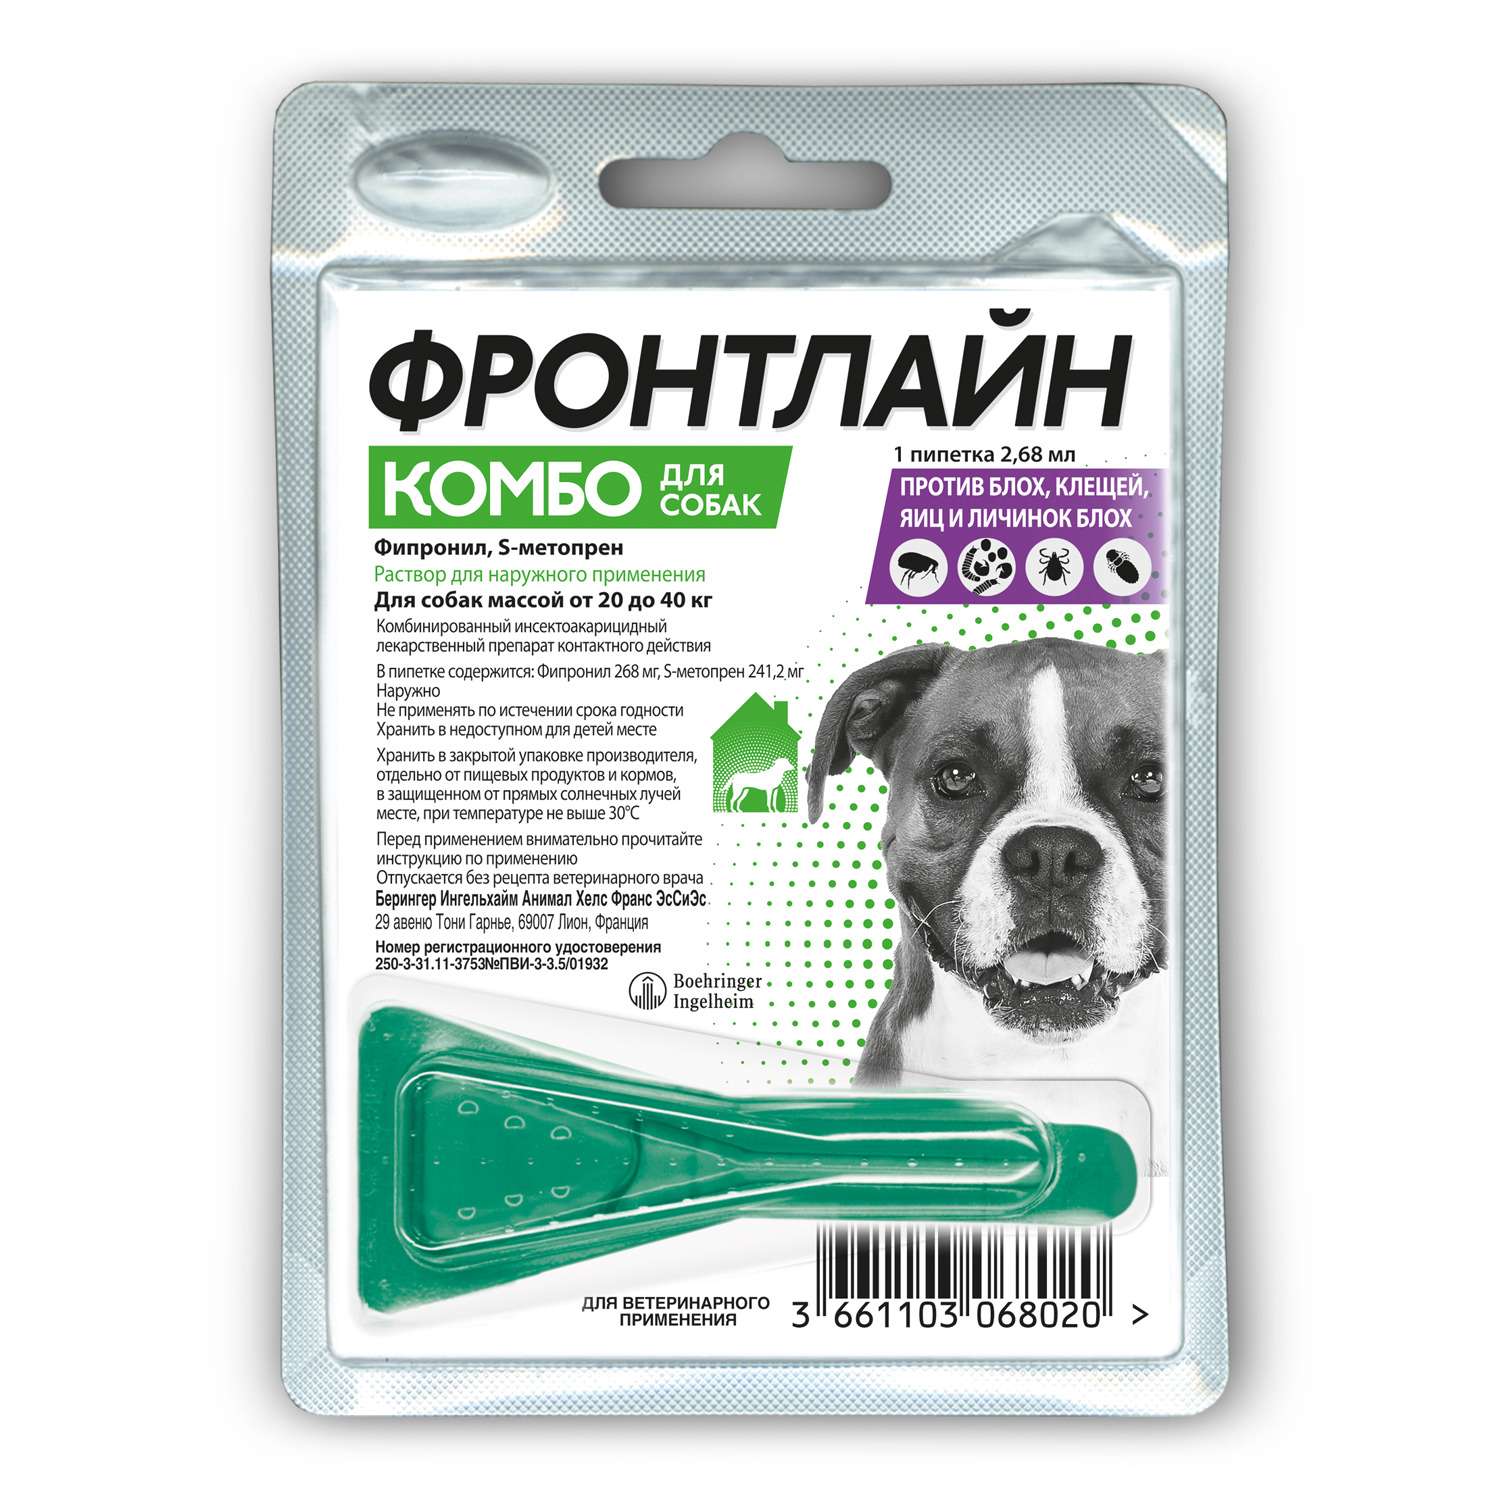 Препарат противопаразитарный для собак Boehringer Ingelheim Фронтлайн Комбо L 2.68г пипетка - фото 1